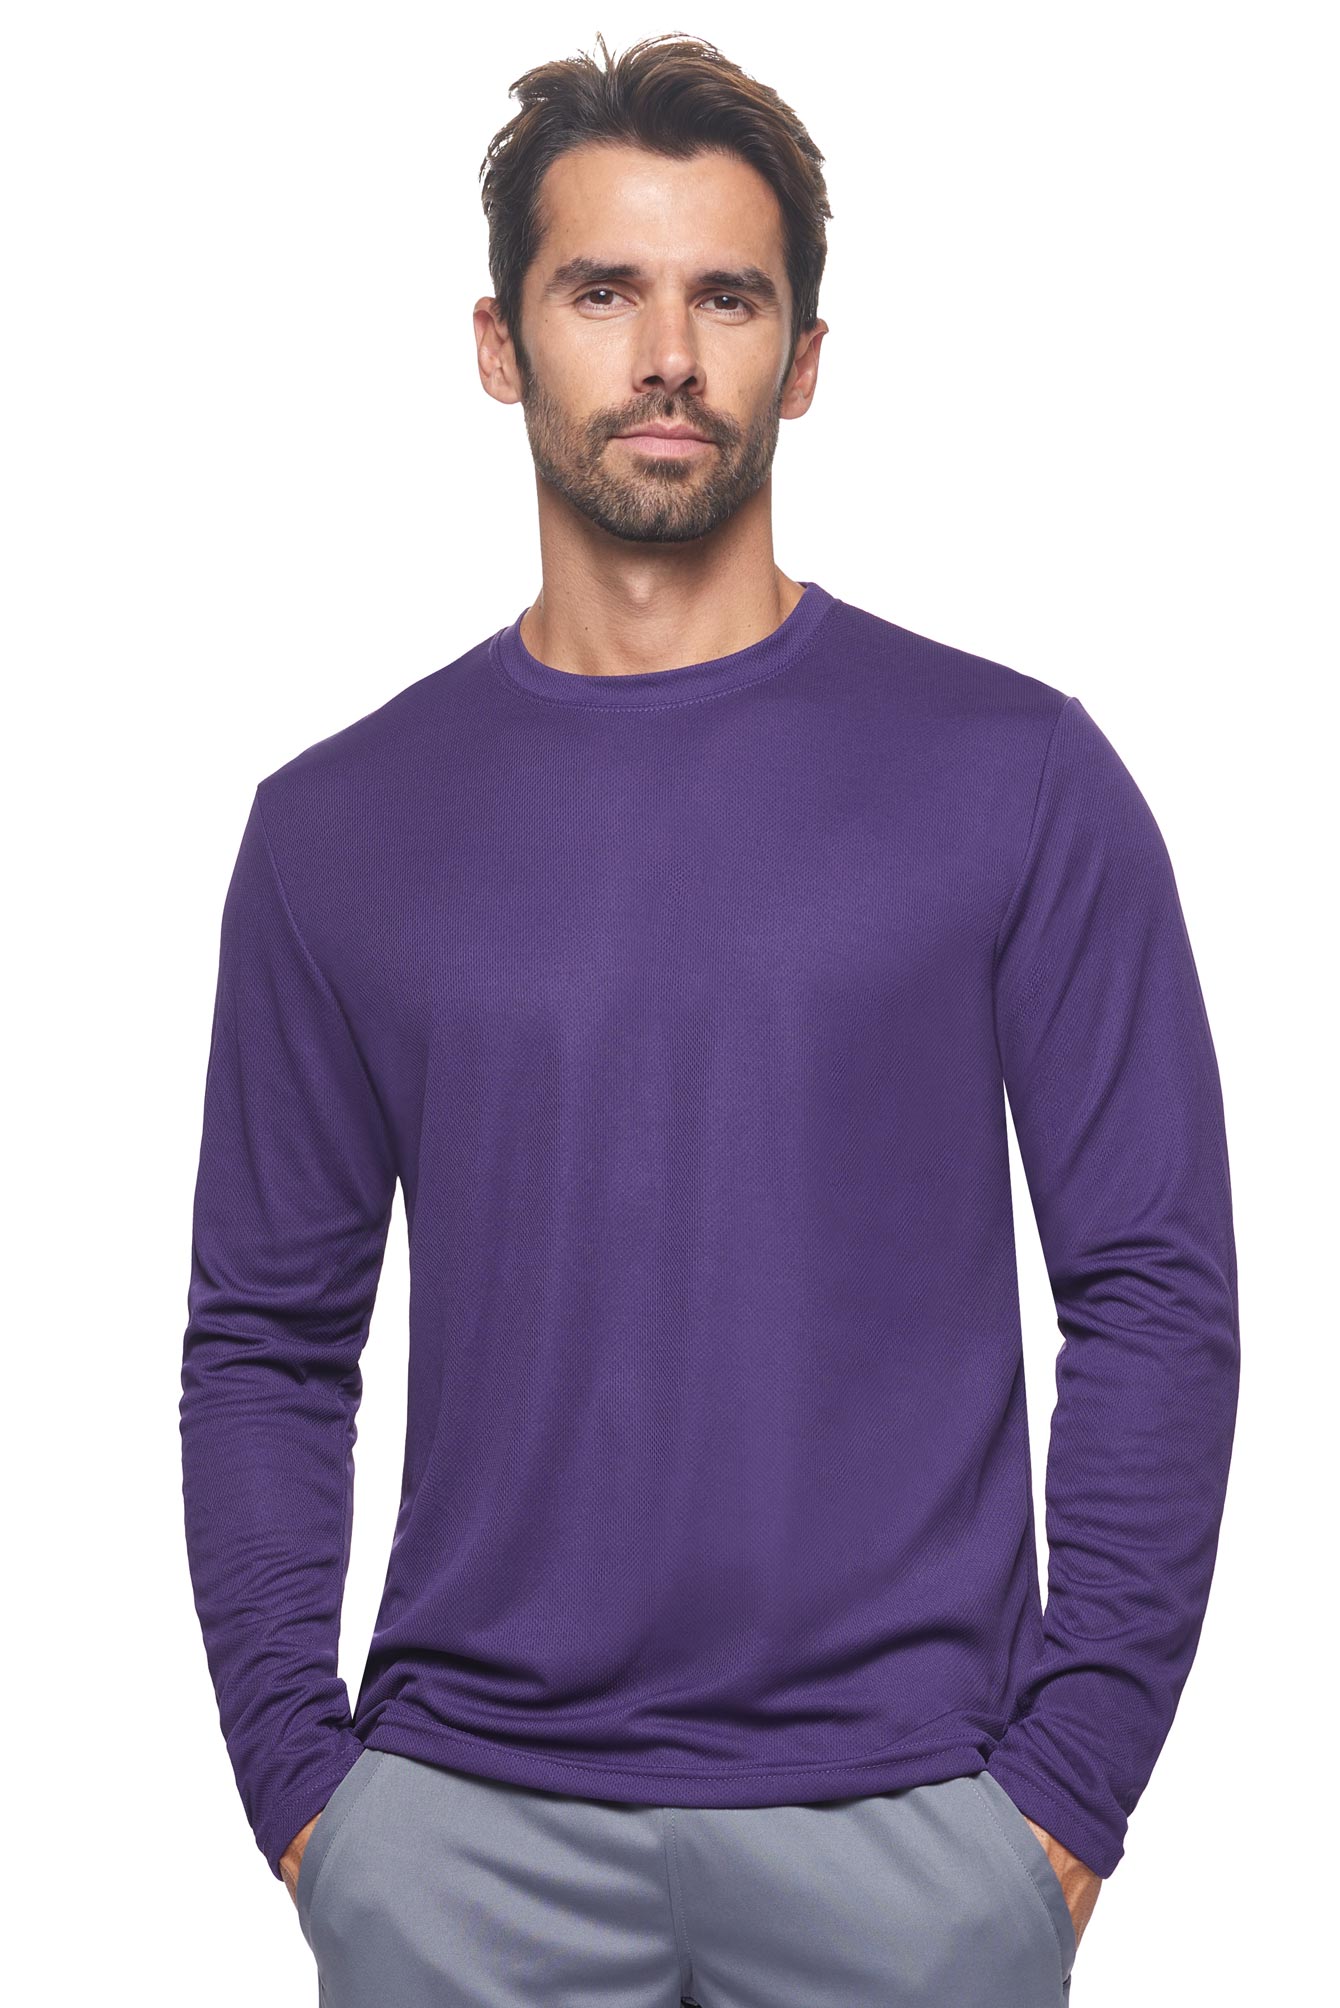 Expert Brand Wholesale Men's Oxymesh Performance Long Sleeve Tec Tee Made in USA AJ901D Dark Purple#dark-purple